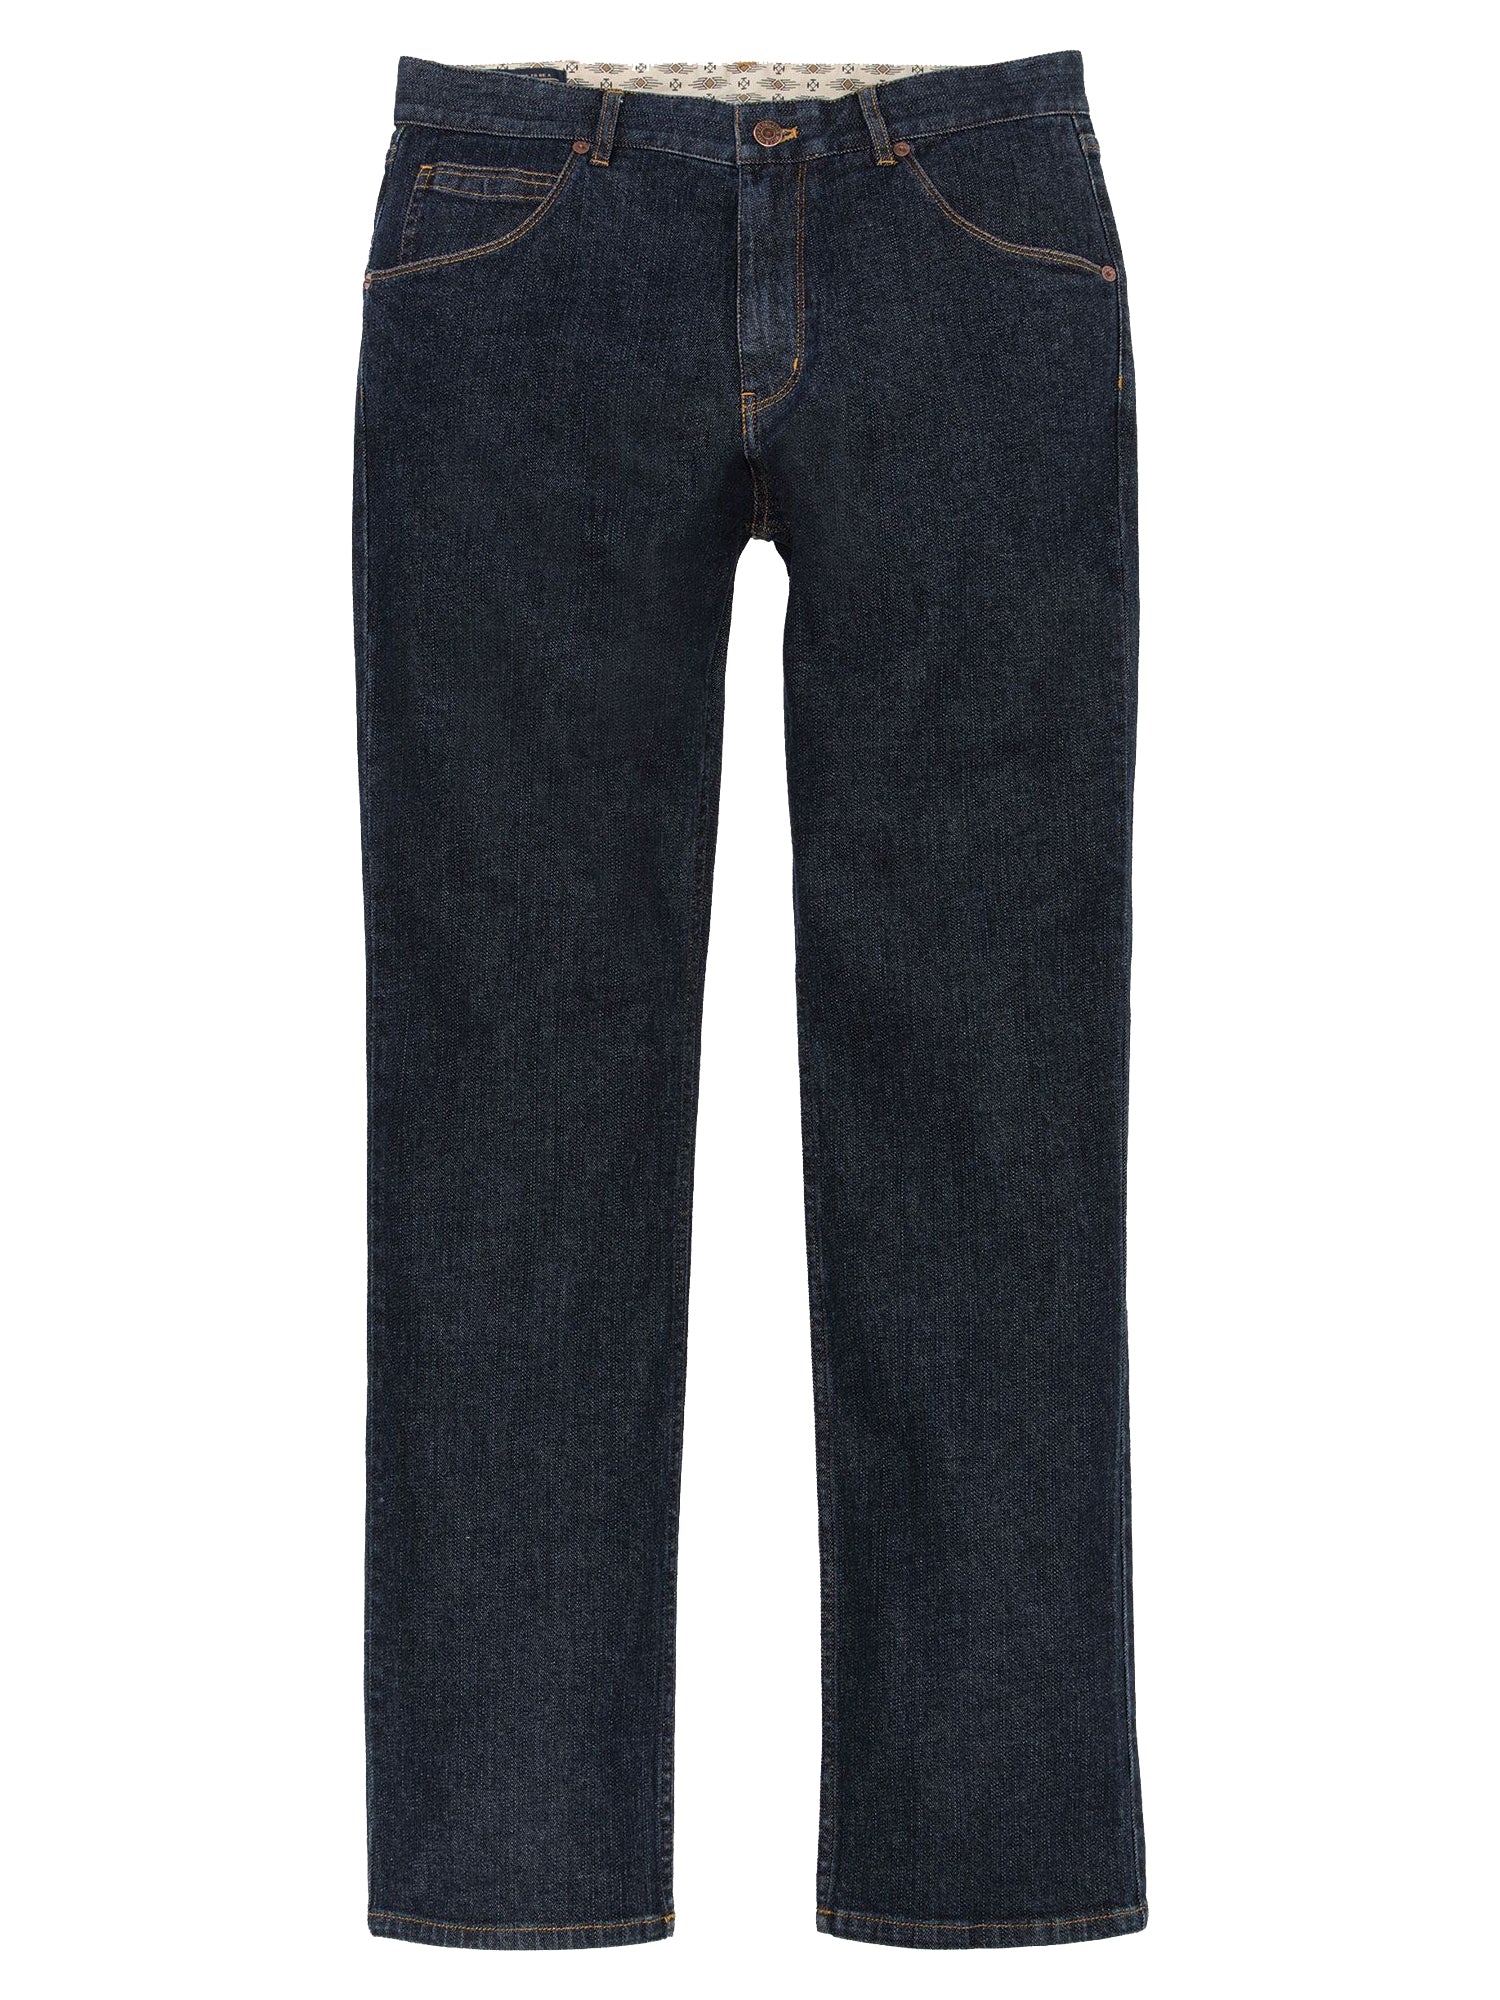 Pendleton Cotton / Spandex About Town Jeans BL013-81742 - Regular Sizes